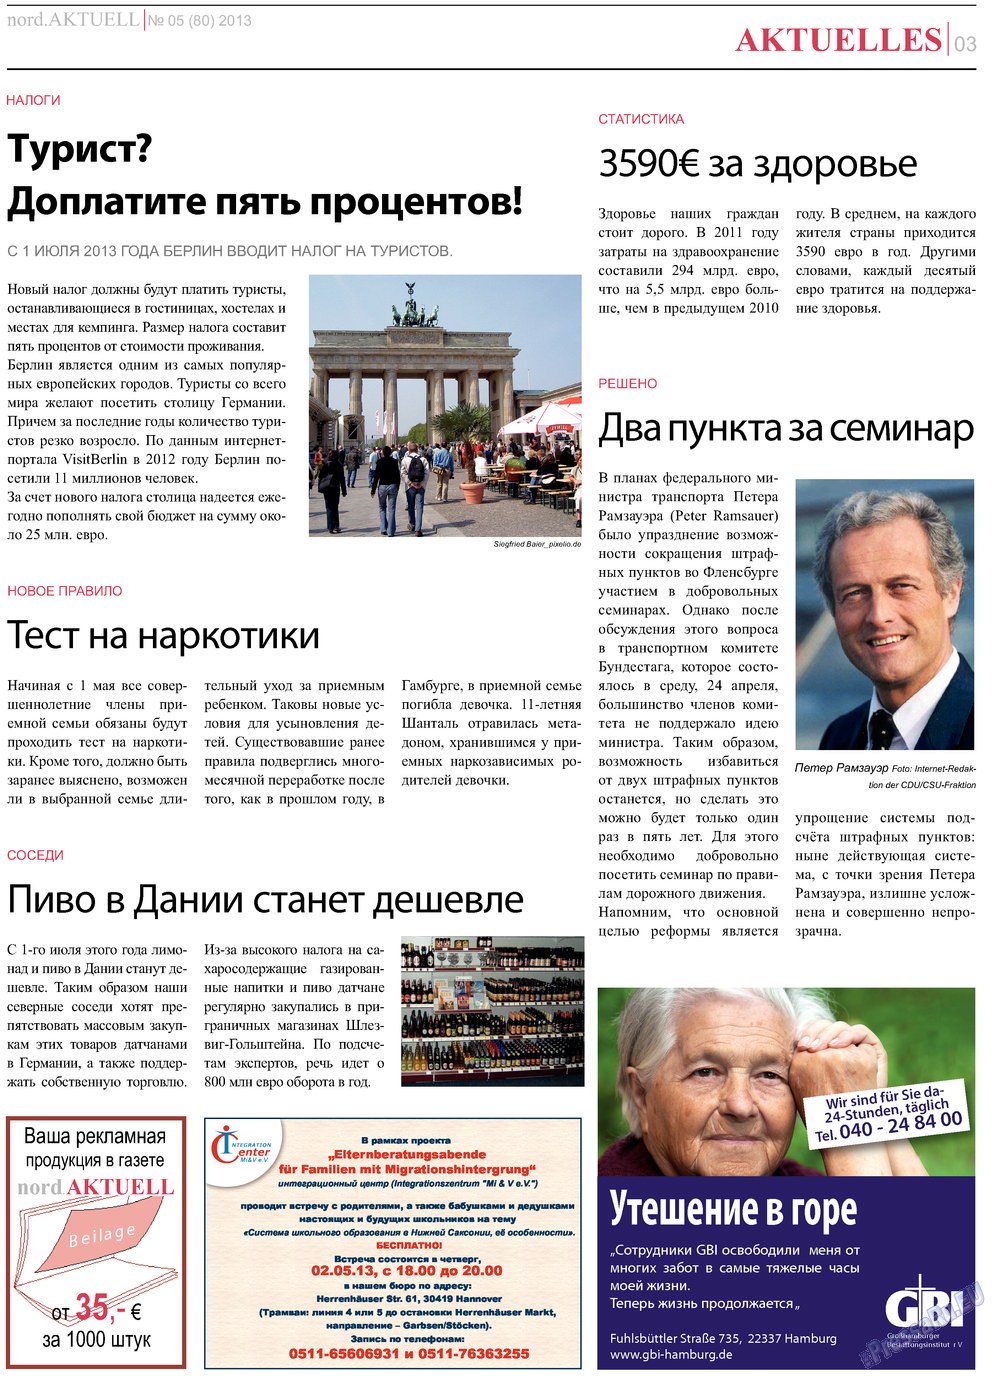 nord.Aktuell, газета. 2013 №5 стр.3